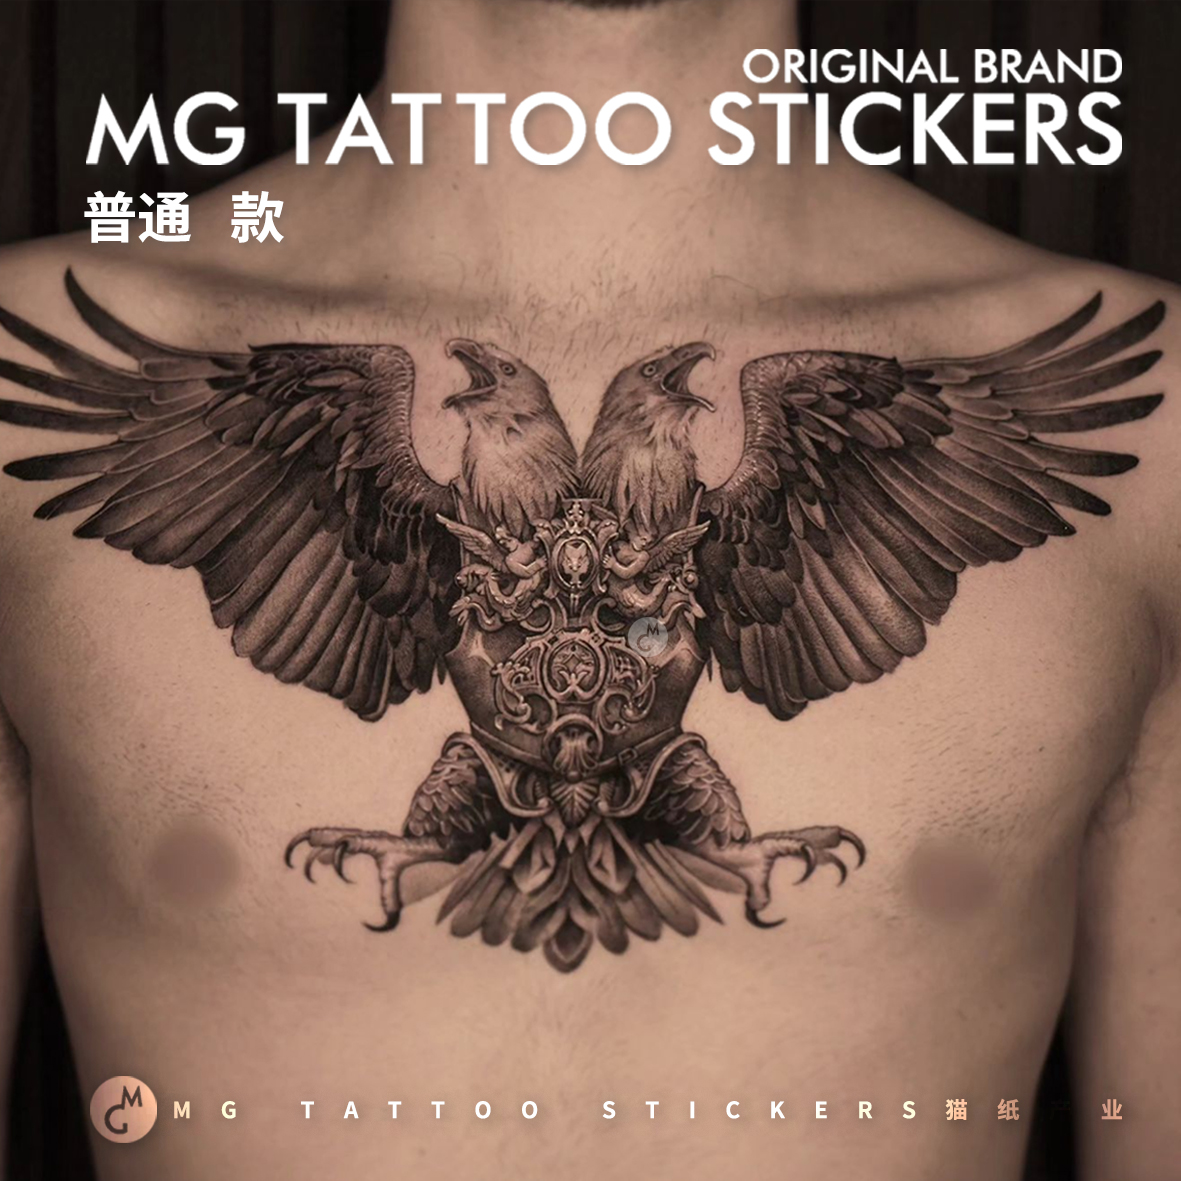 MG tattoo 权力游戏 罗马帝国双头鹰图案霸气大图花胸纹身贴纸男